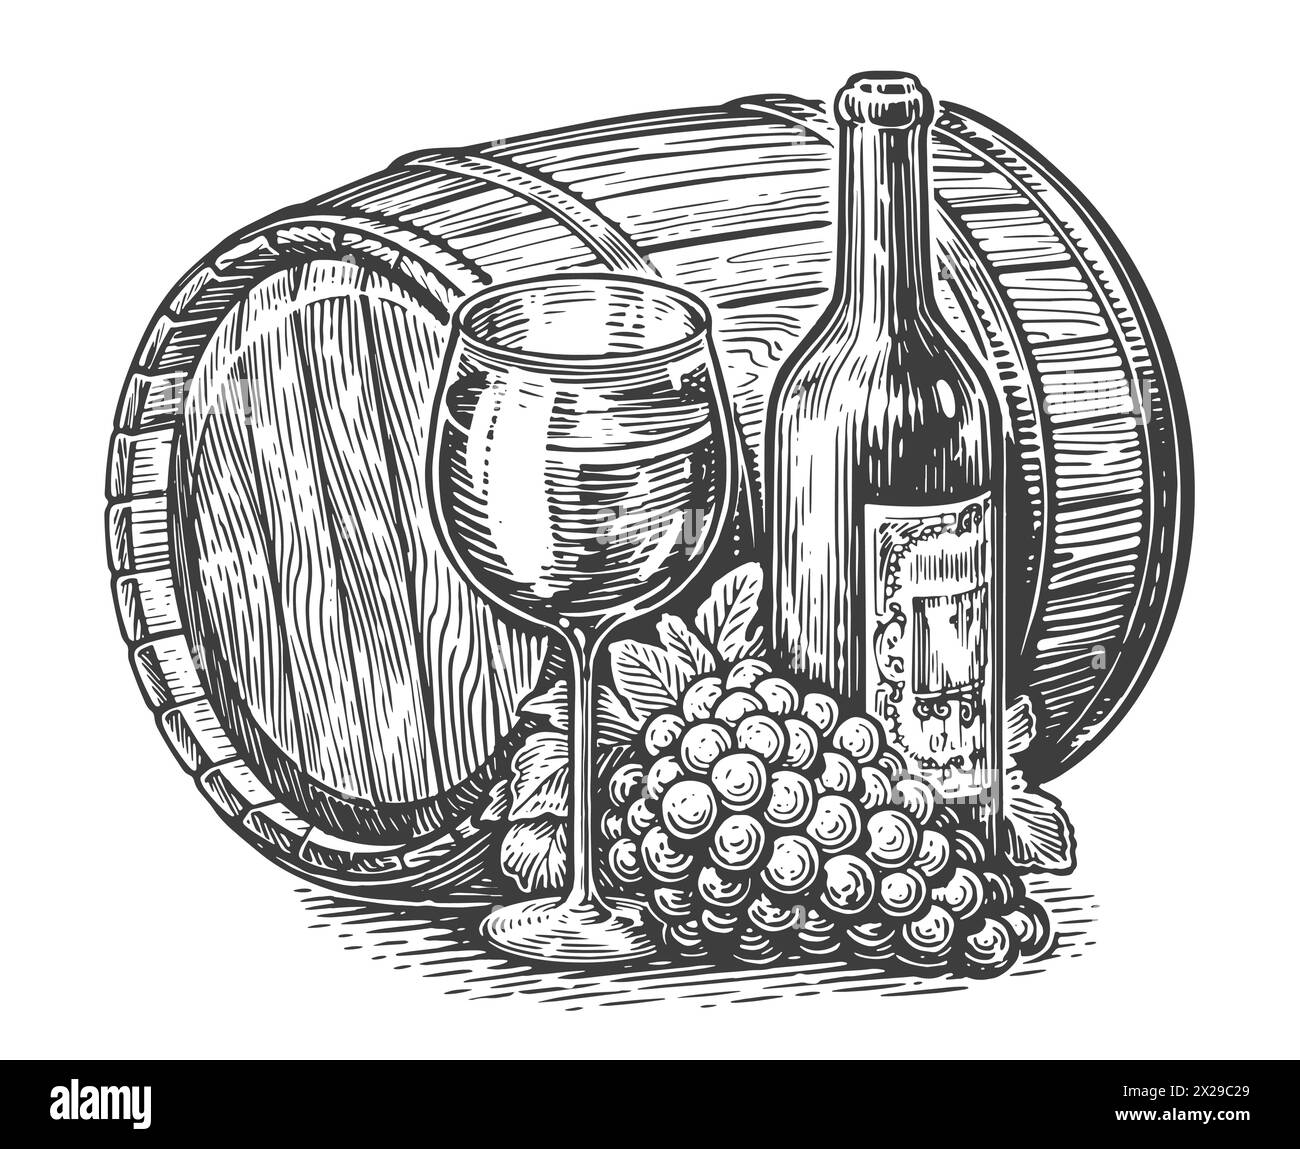 Wine bottle, glass of wine and wooden barrel. Vintage sketch vector illustration engraving style Stock Vector